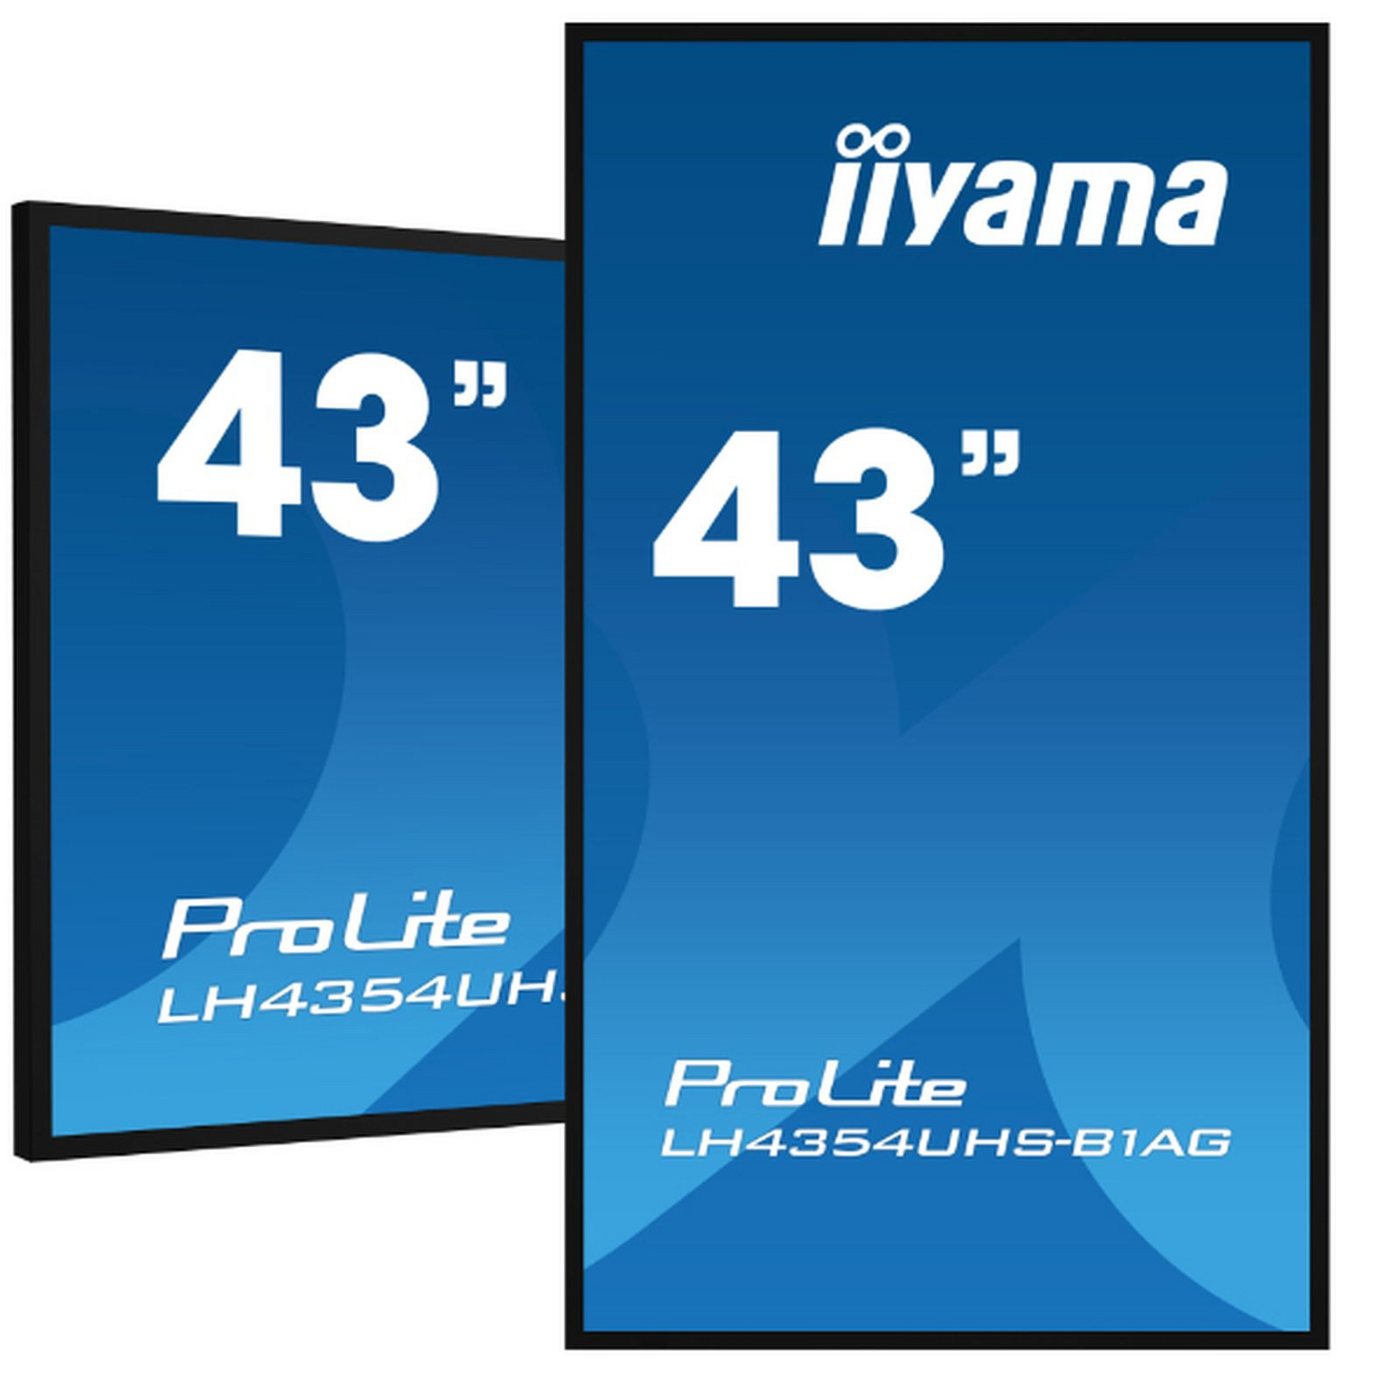 Iiyama Dis Public 43 LH4375UHS-B1AG UHD TFT-Monitor (3840 x 2160 px, 4K Ultra HD, 8 ms Reaktionszeit, IPS, Wi-Fi, HDCP) von Iiyama